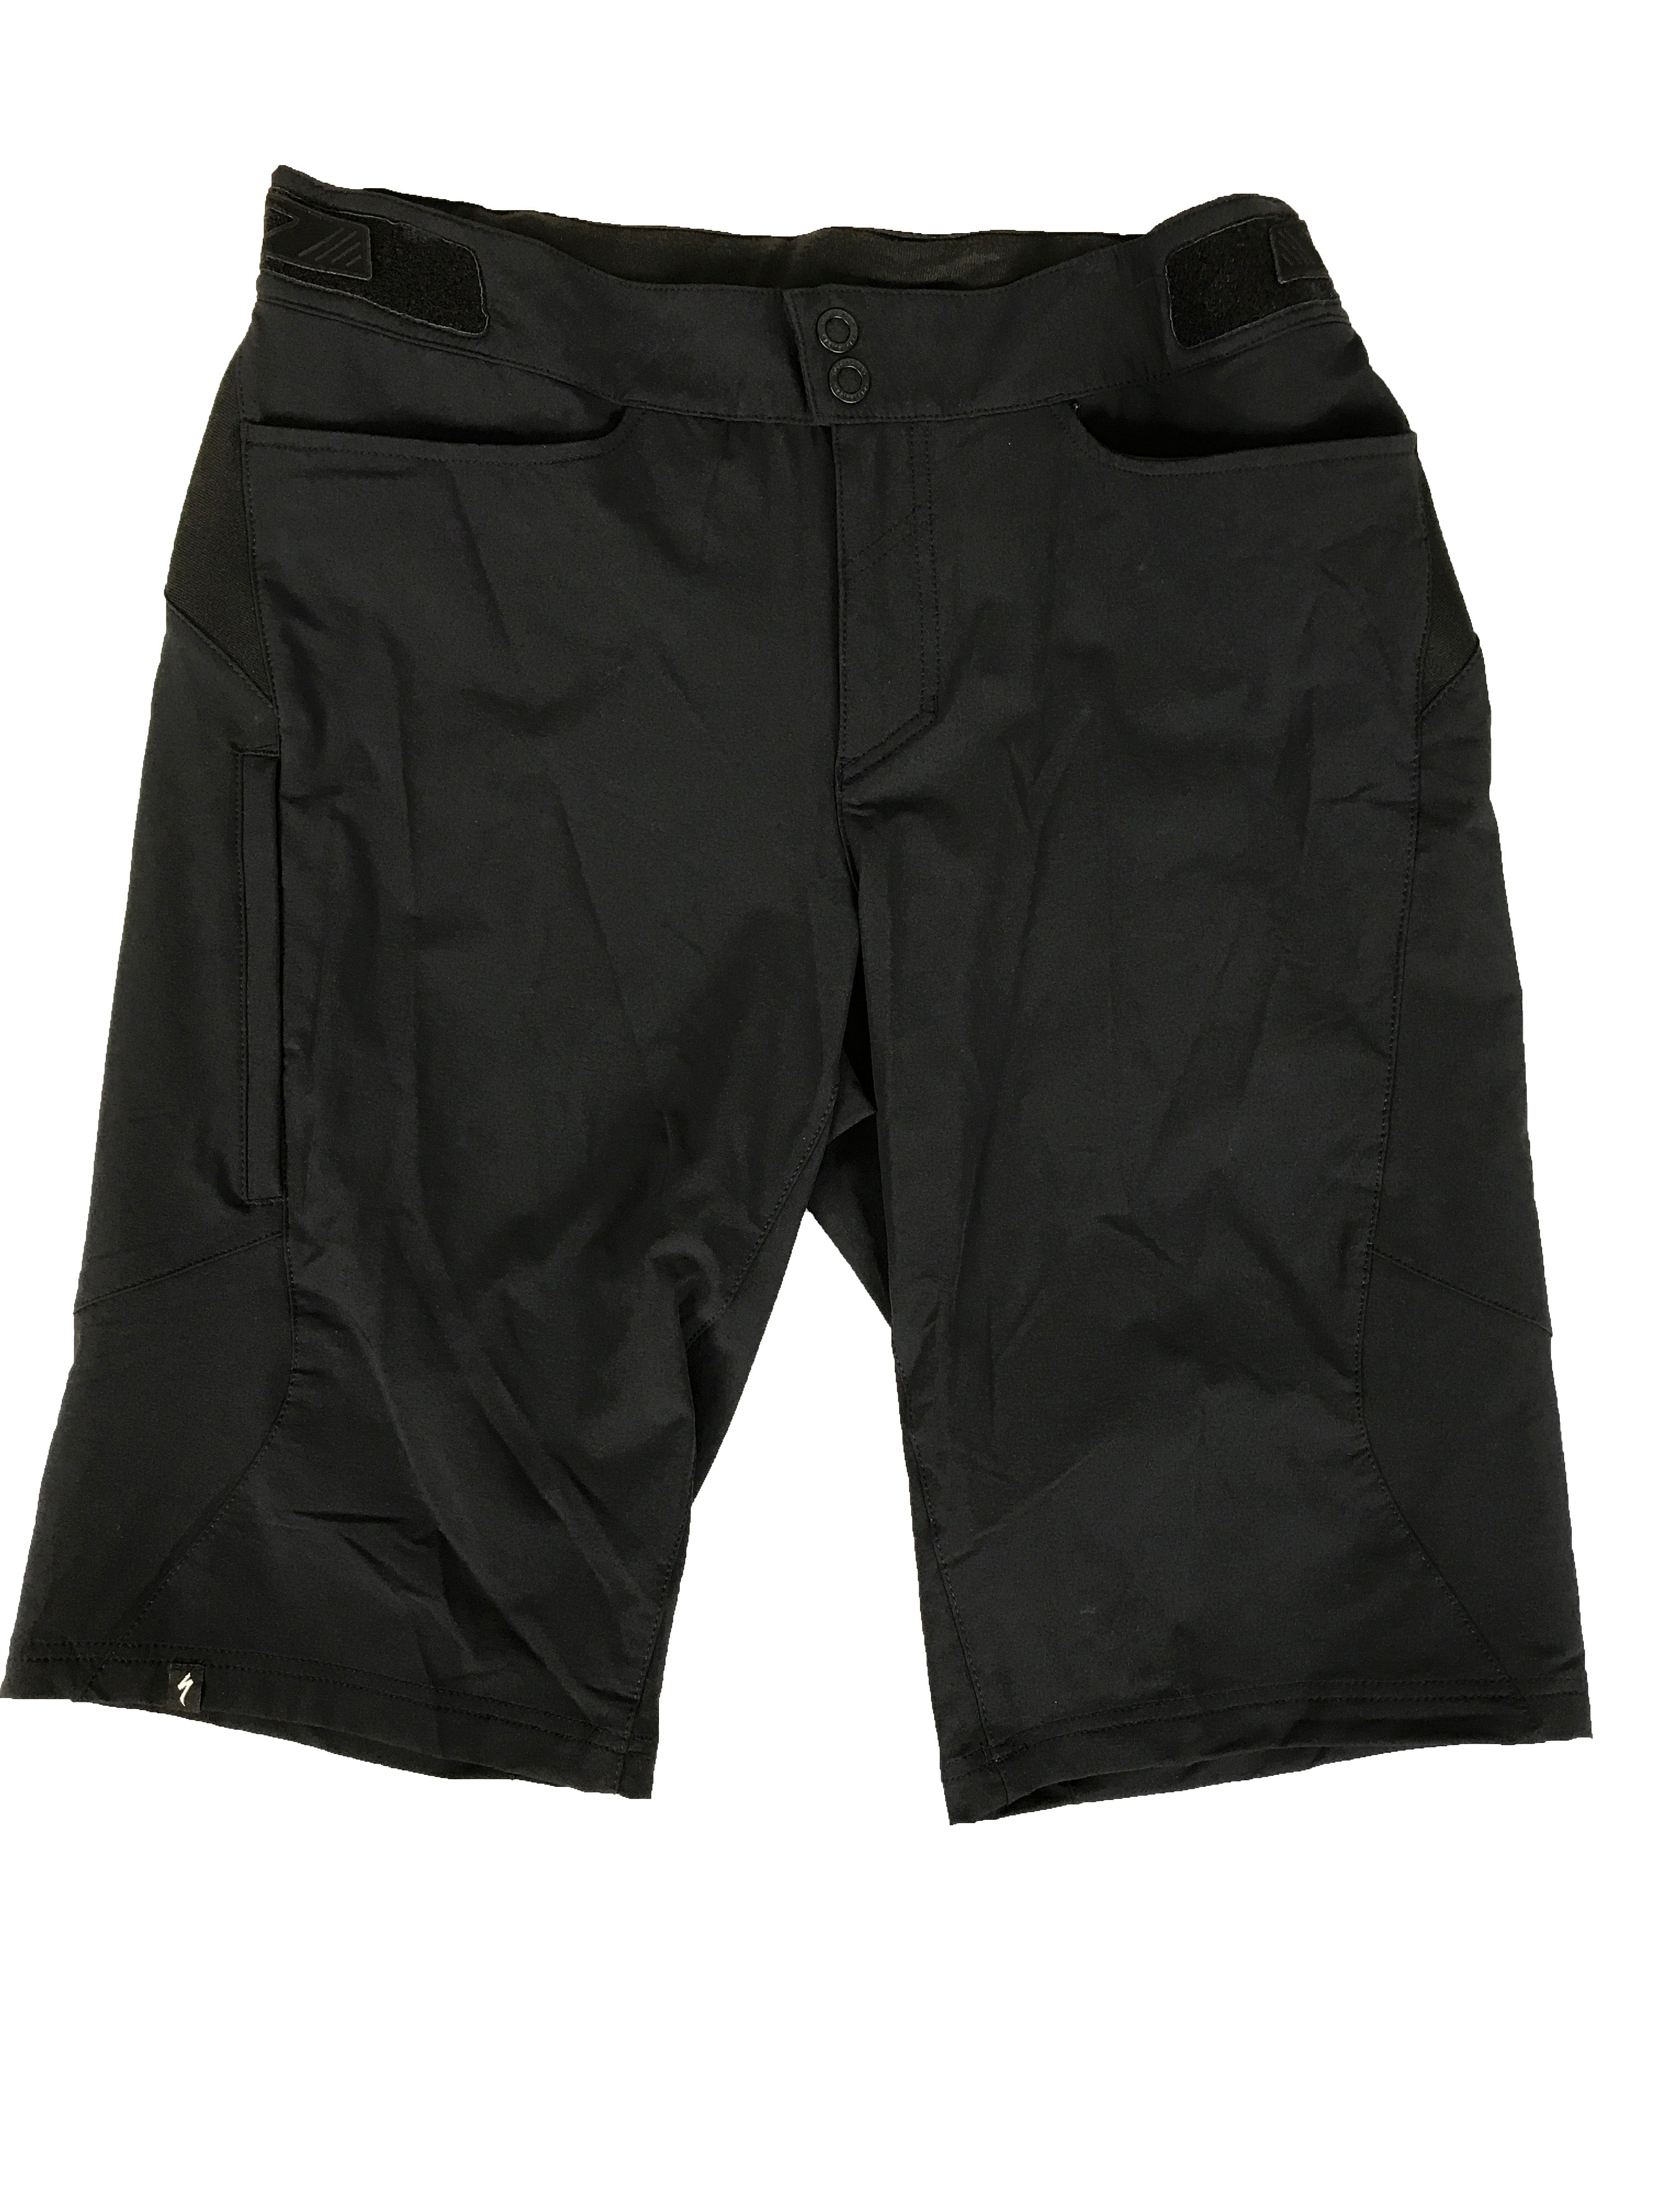 Specialized Enduro Comp Black Shorts Men's Size 36 NWOT